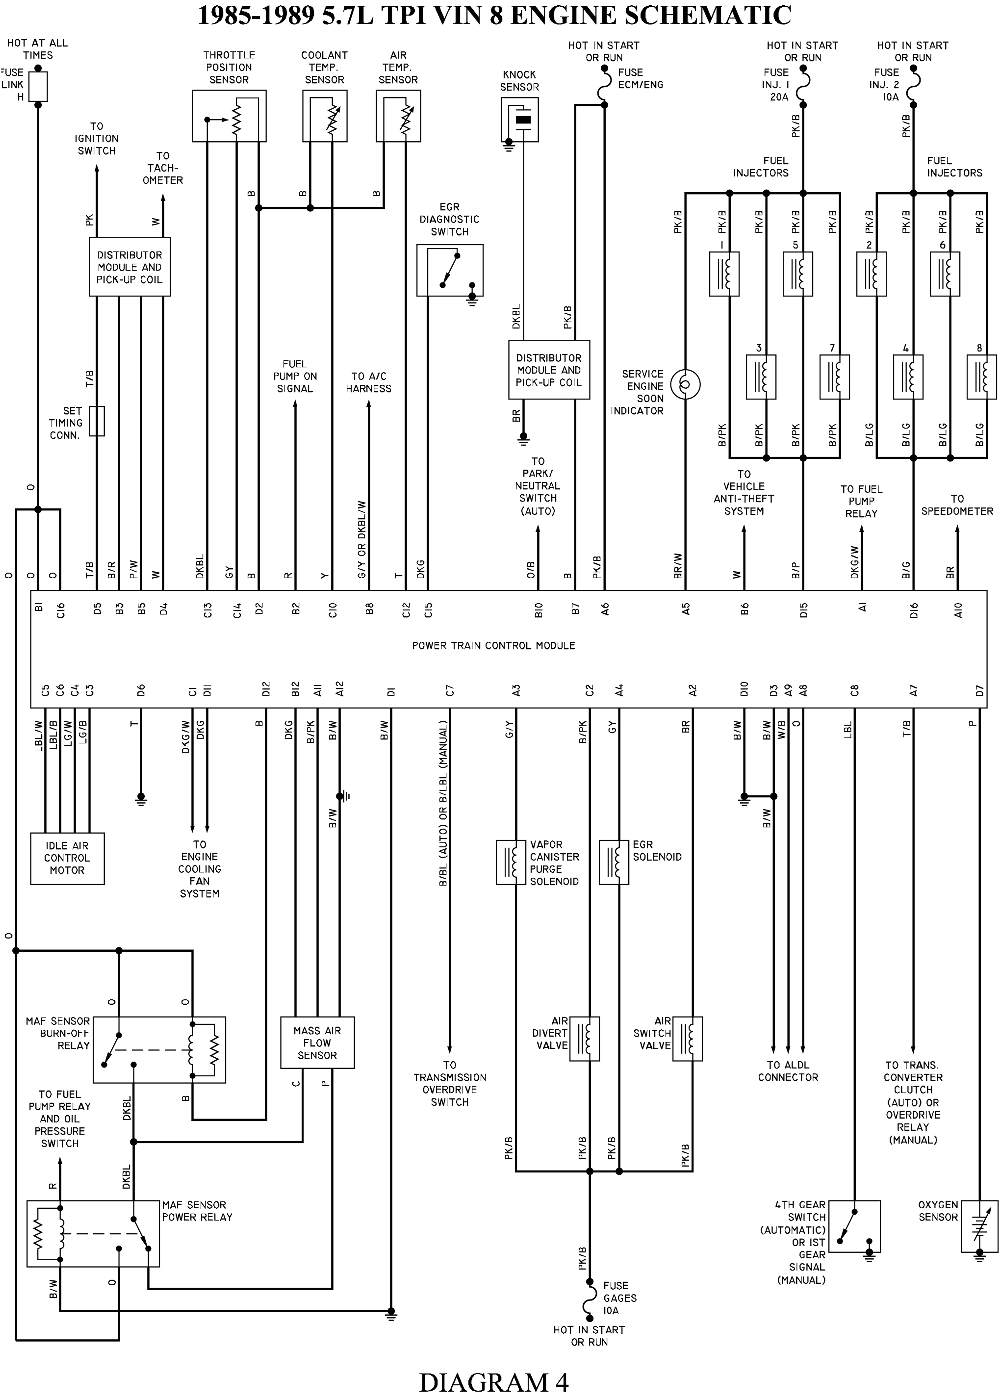 repair guides wiring diagrams wiring diagrams autozone com wire diagrams by vin wire diagrams by vin